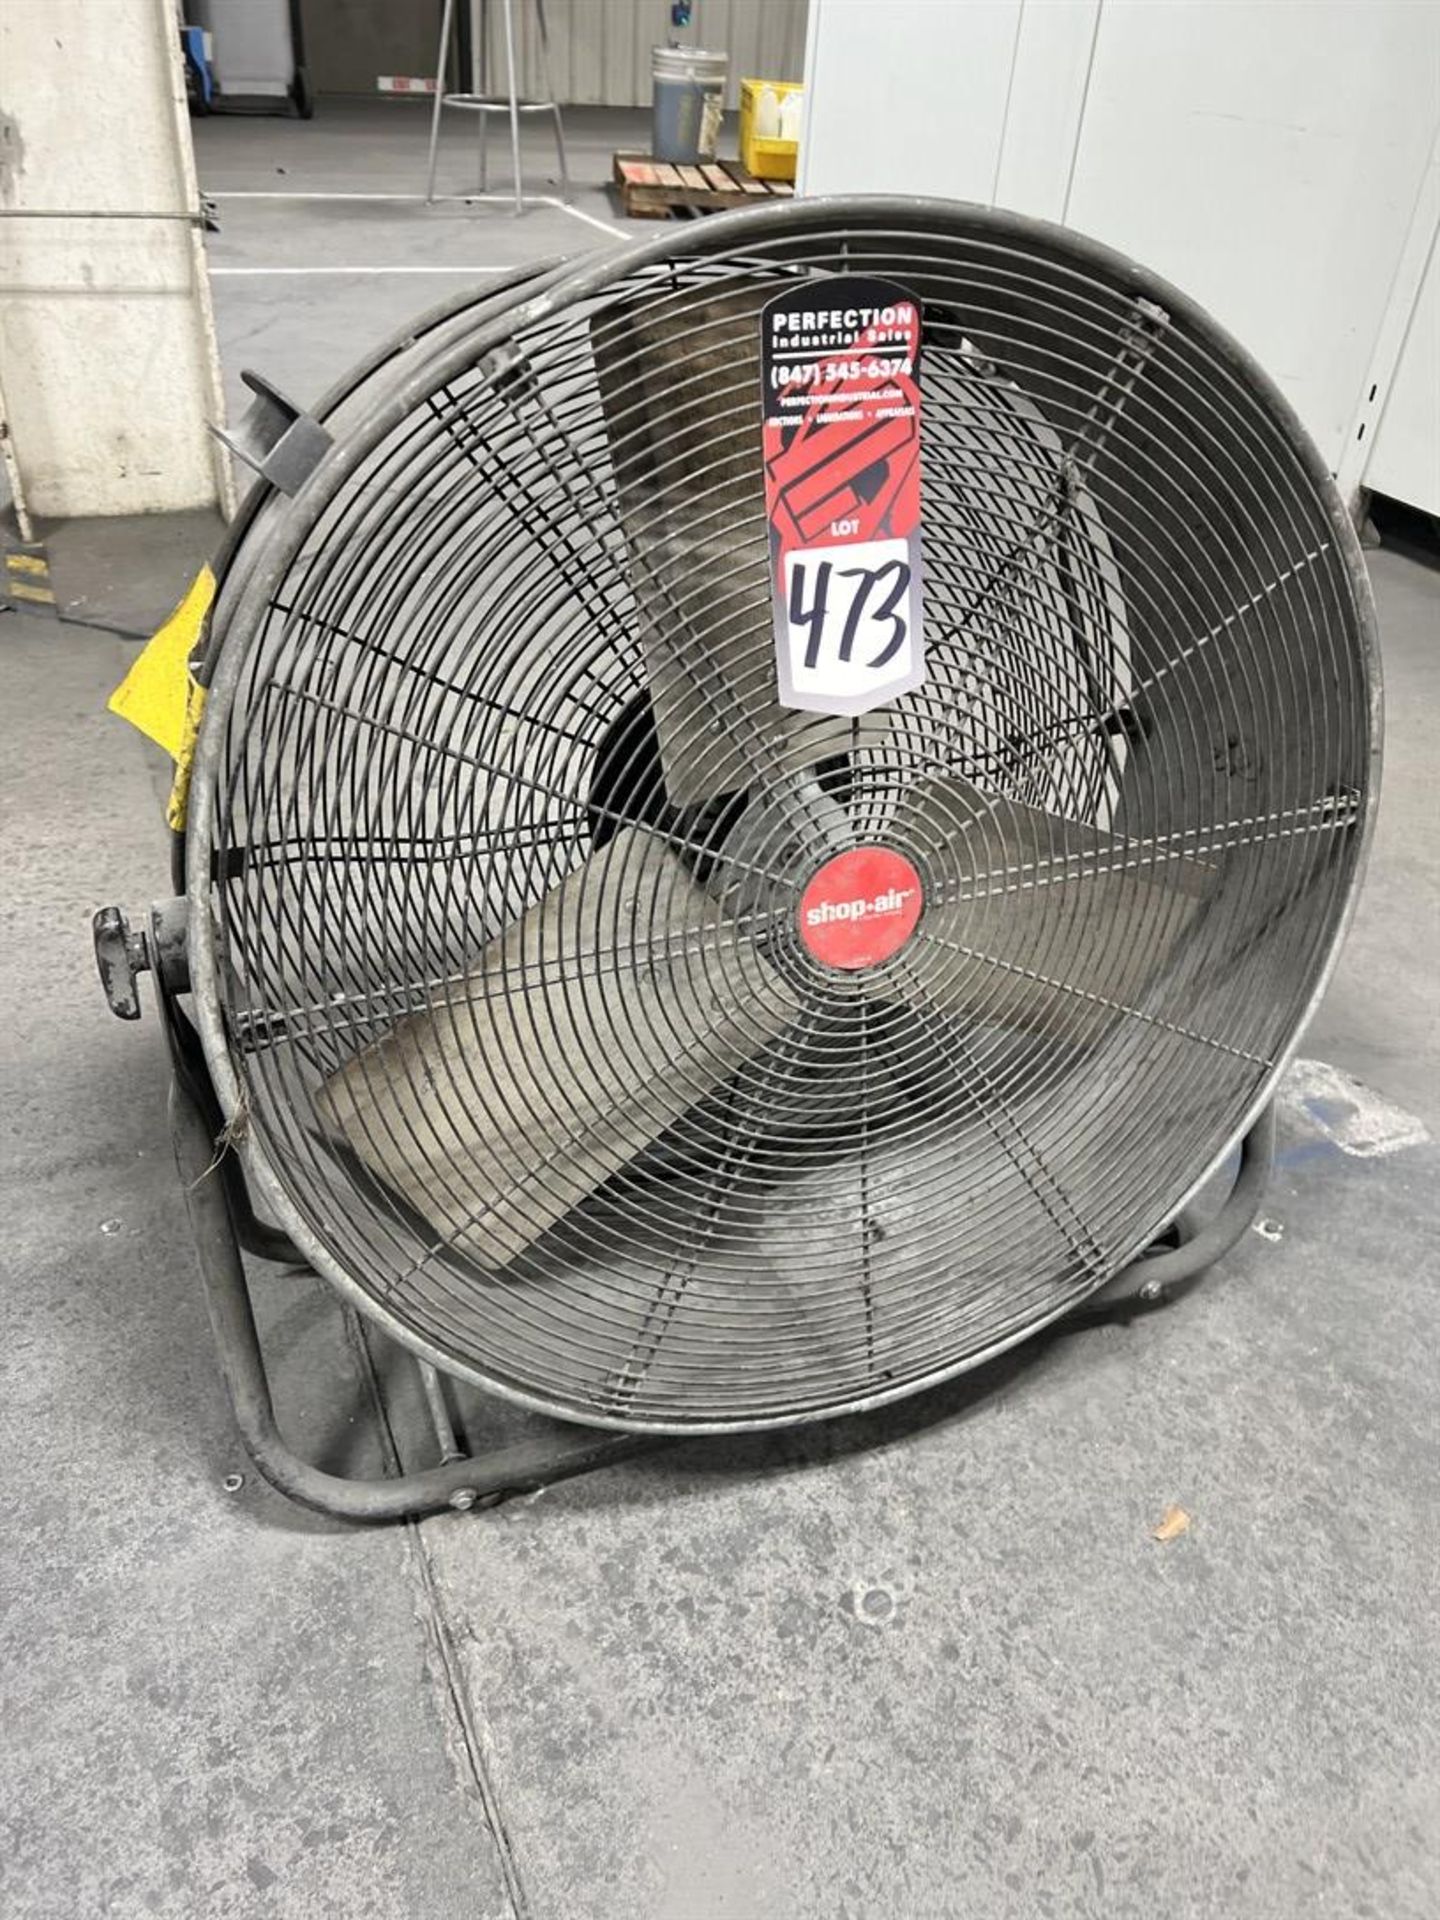 SHOP-AIR 24" Floor Fan